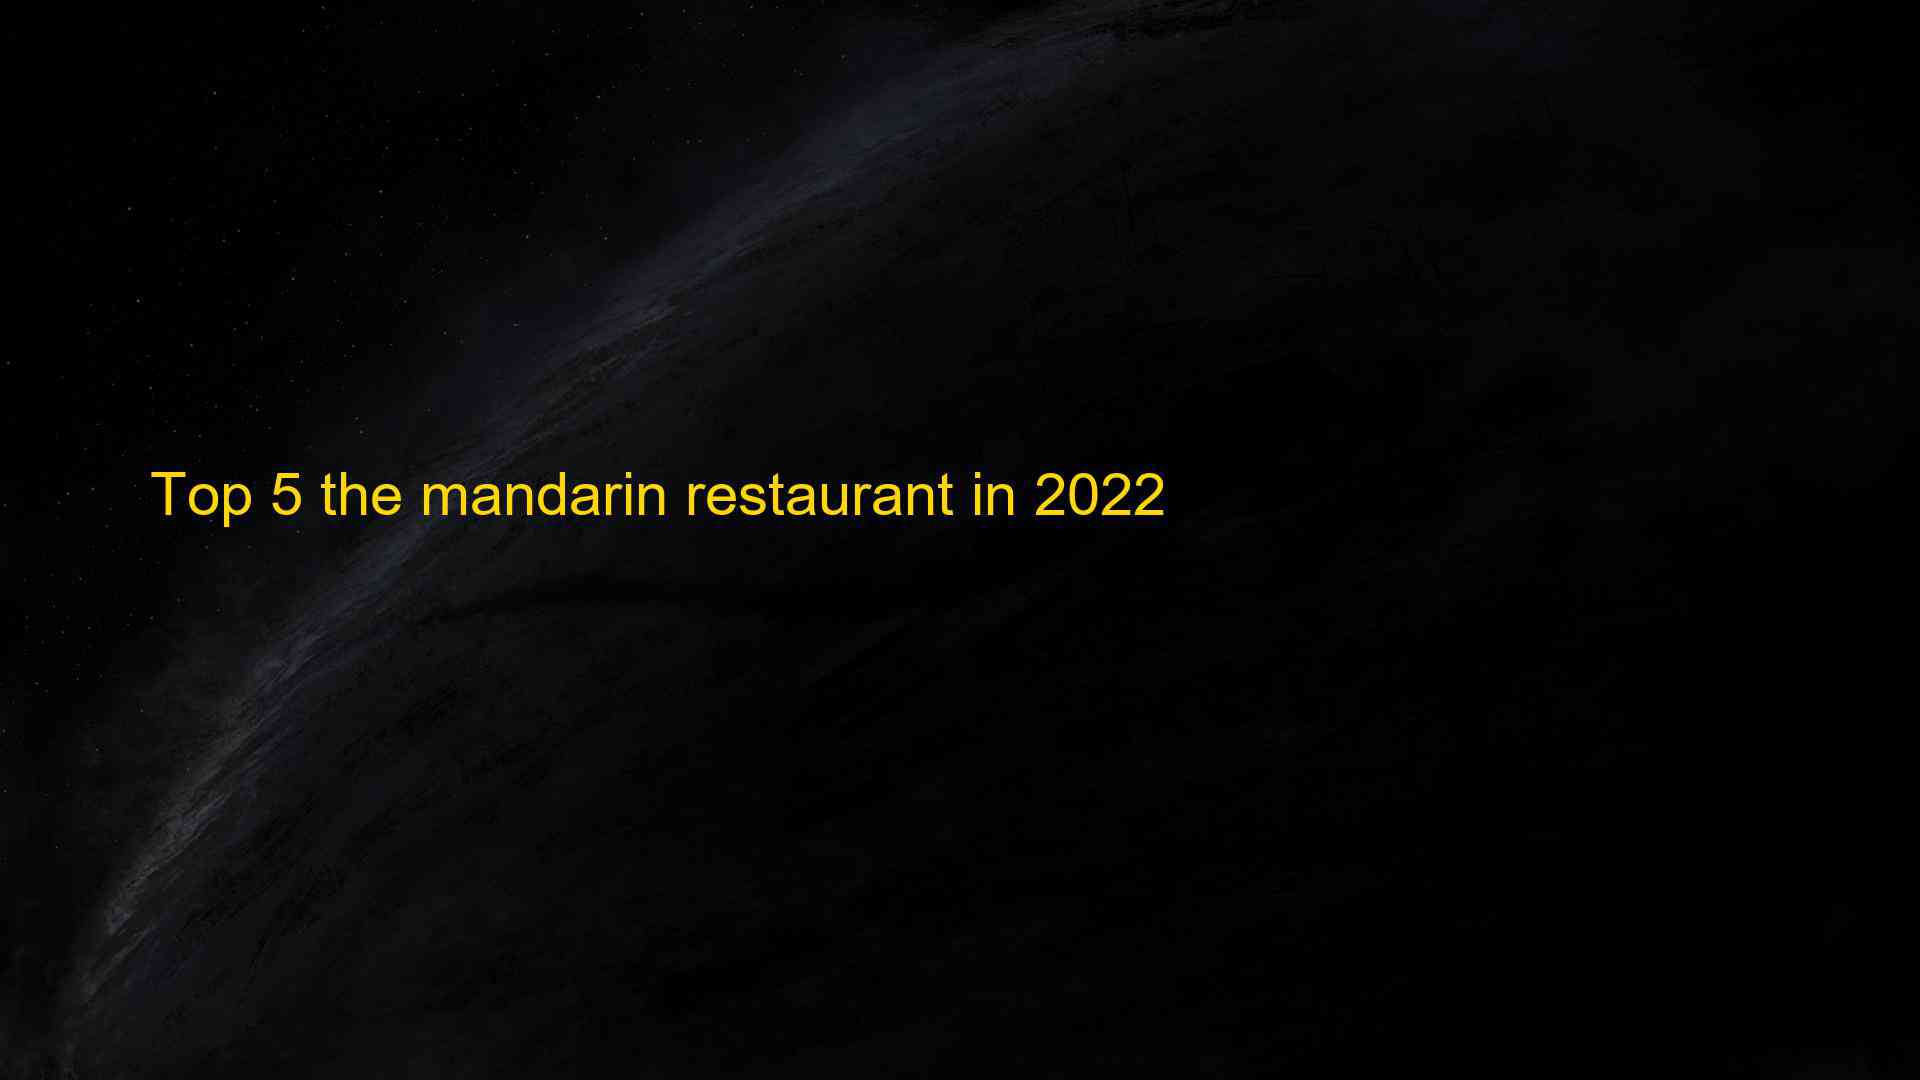 Top 5 the mandarin restaurant in 2022 1663540744